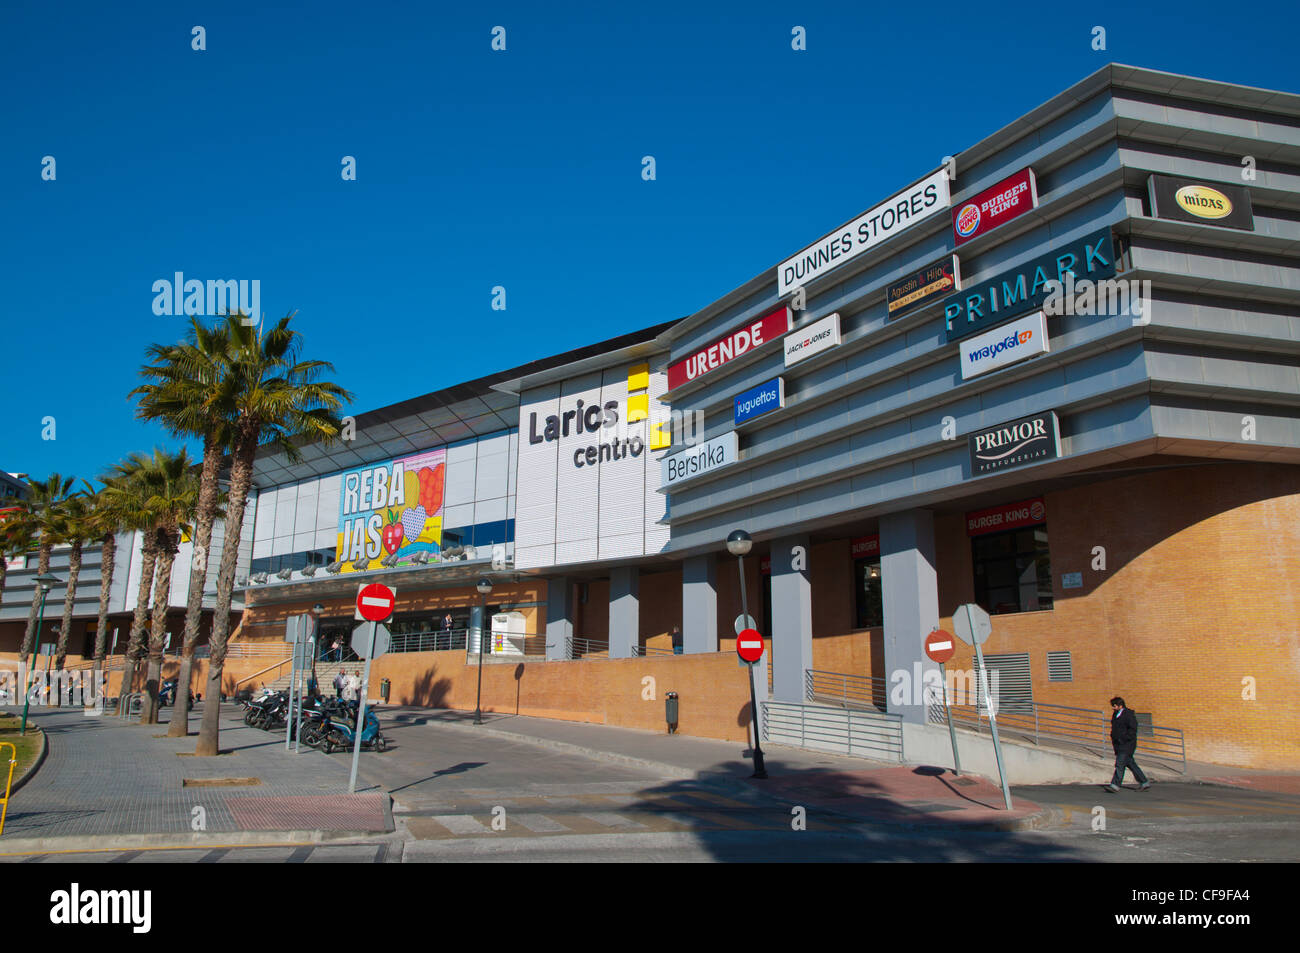 Larios centro shopping centre mall central Malaga Andalusia Spain Europe  Stock Photo - Alamy